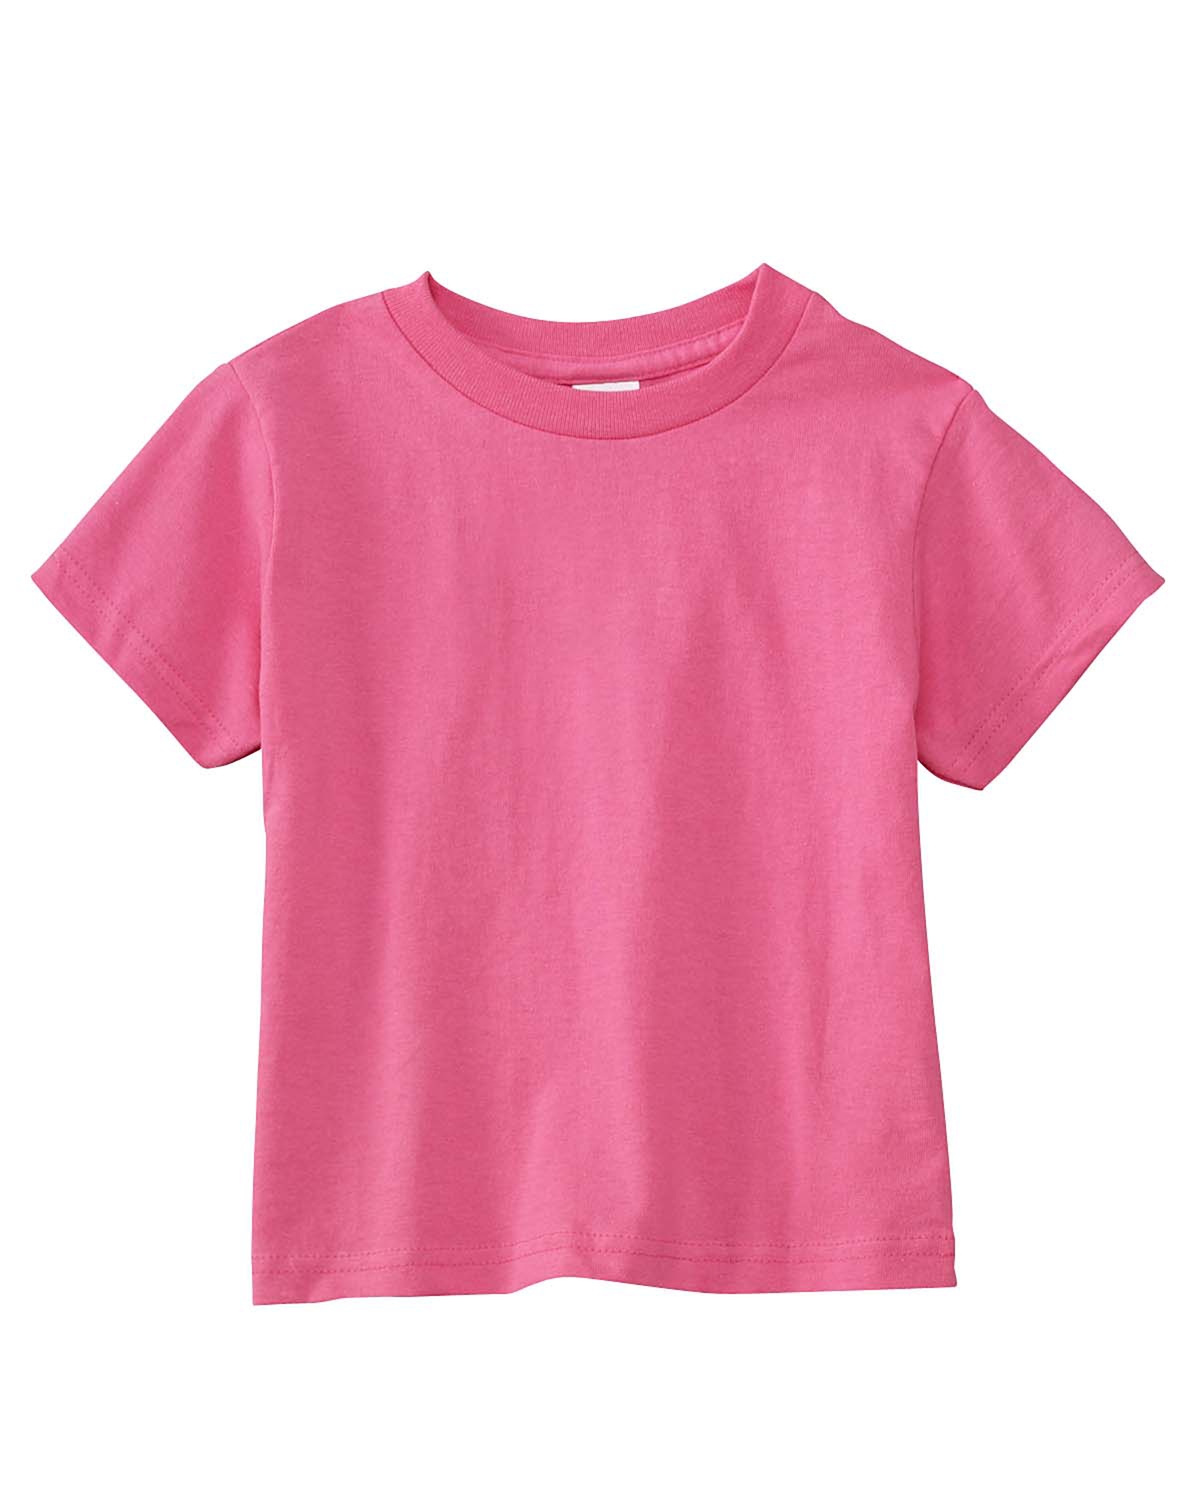 Rules of the Roadhouse Dalton TShirt Rabbit Skins Apparel Toddler /& Kids Fine Jersey Tee T-Shirt T Shirt FREE SHIPPING